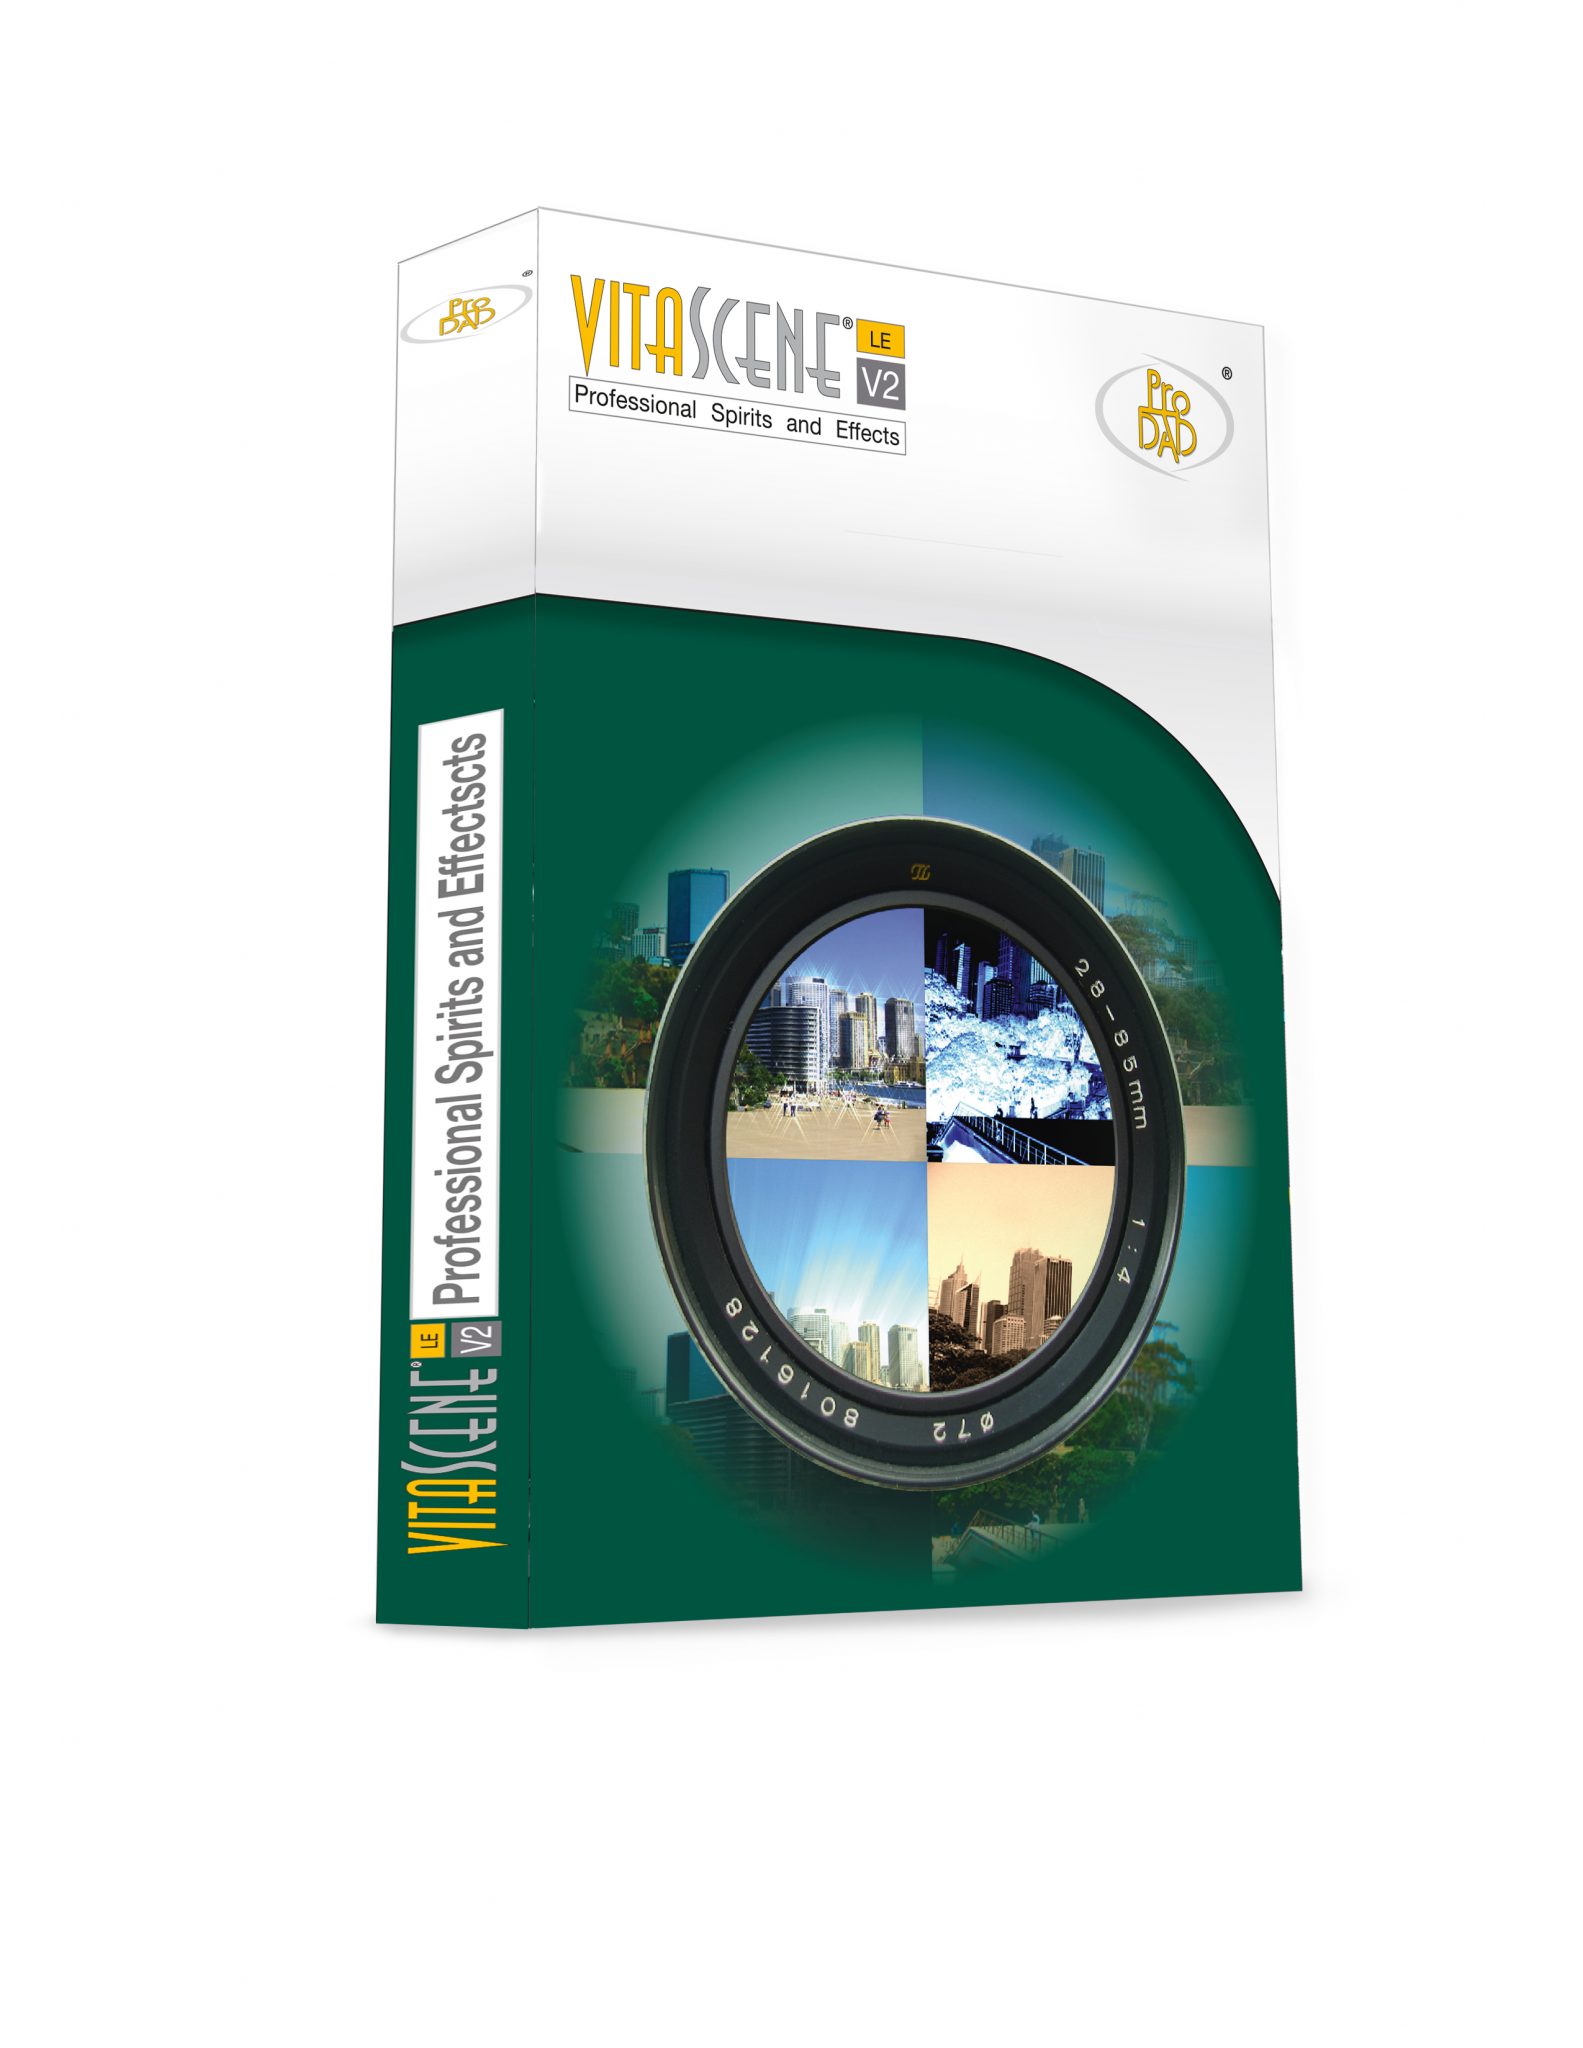 download proDAD VitaScene 5.0.312